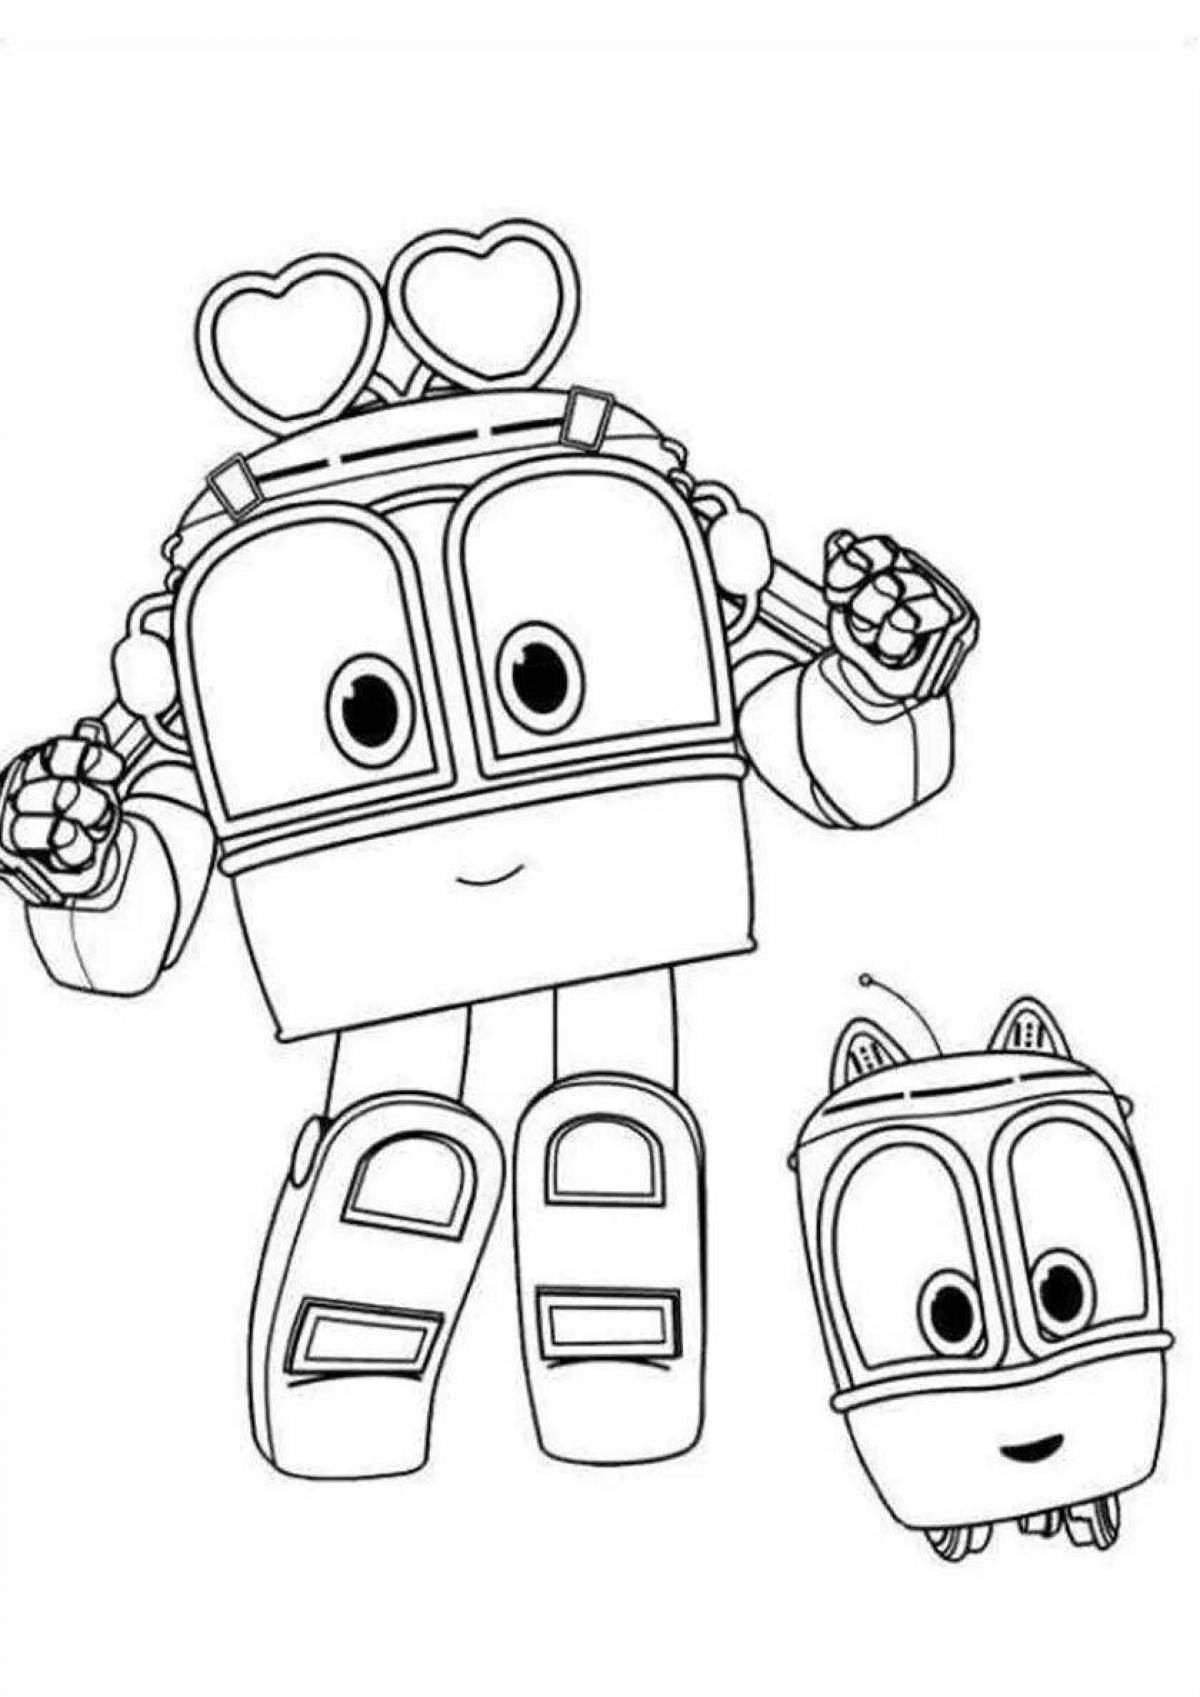 Kay train robot fun coloring book